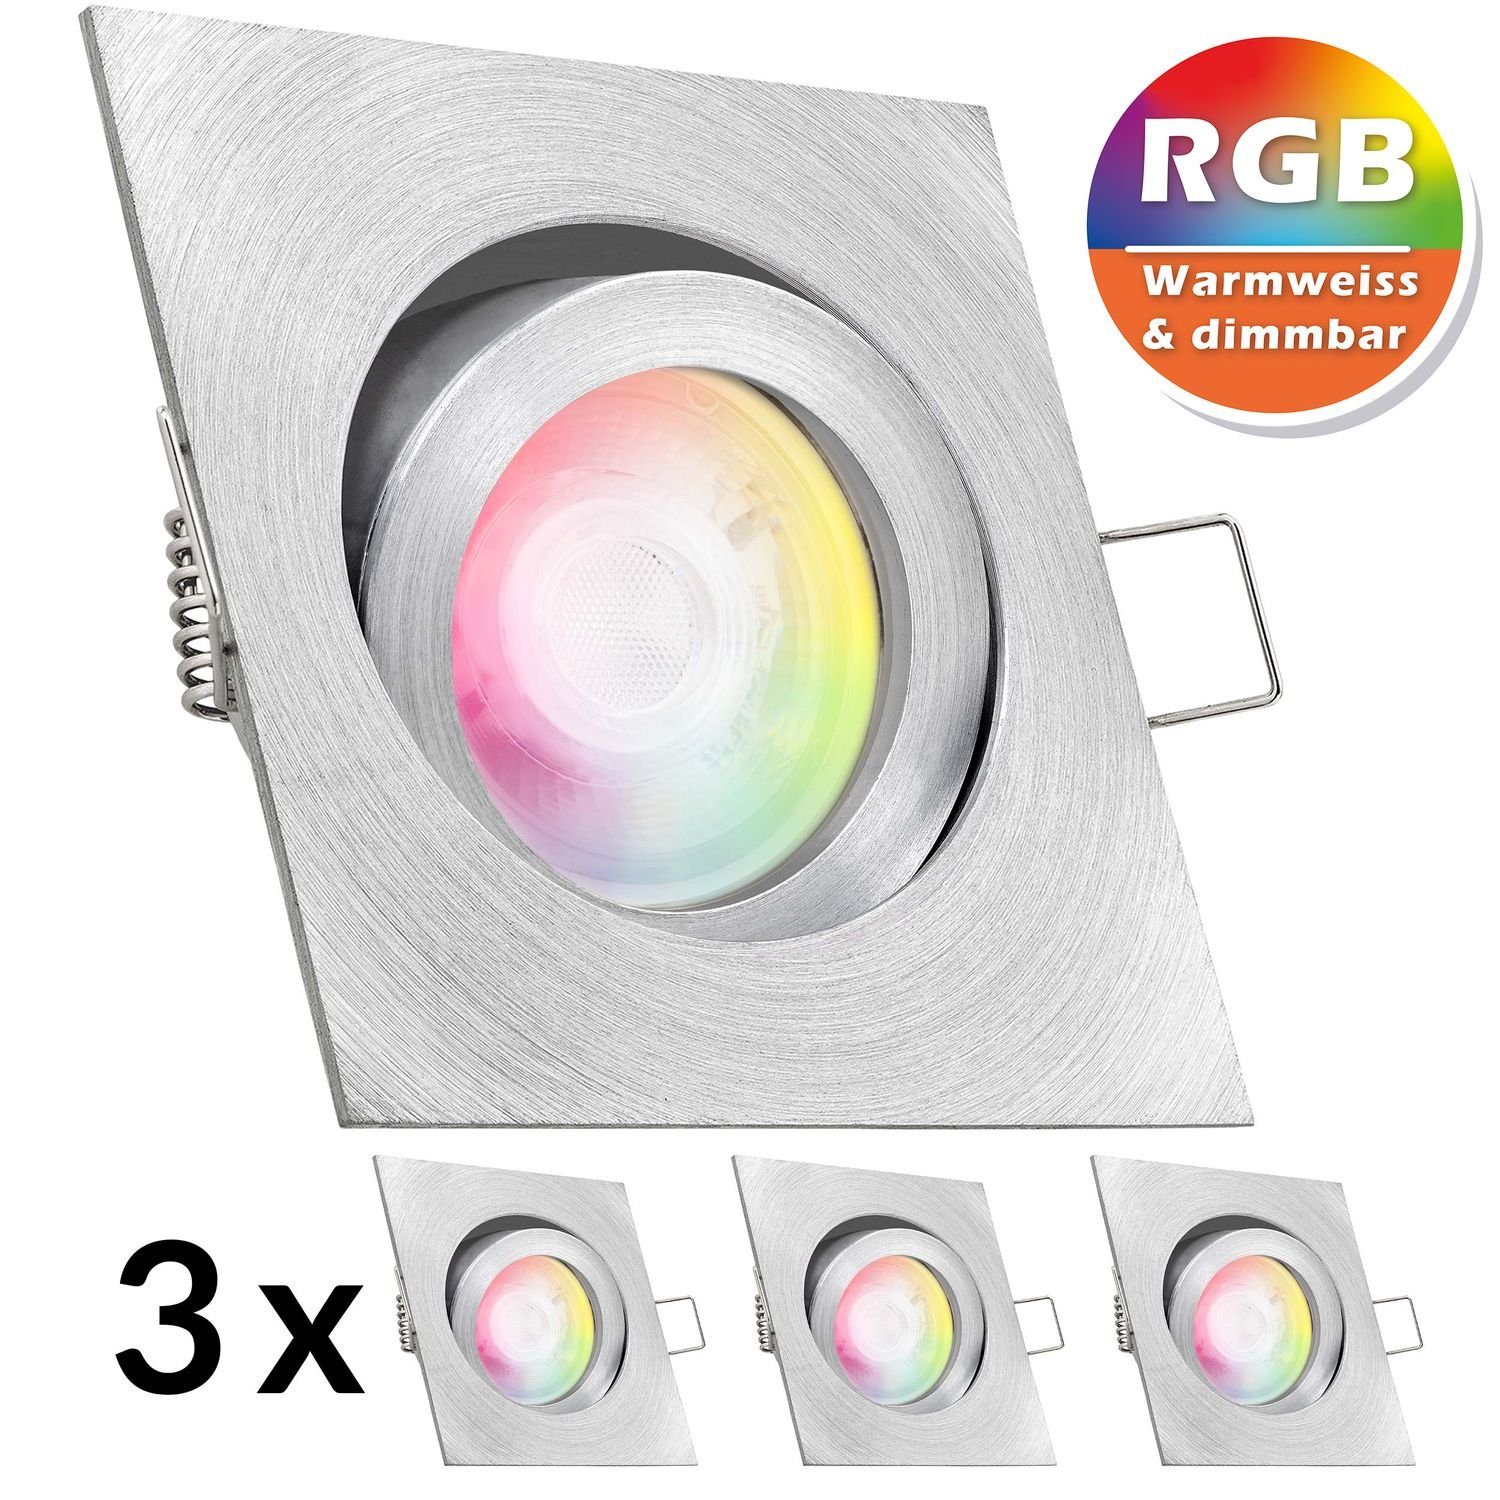 billig produzieren LEDANDO LED Einbaustrahler 3er RGB 3W natur Einbaustrahler L aluminium mit flach extra LED Set in